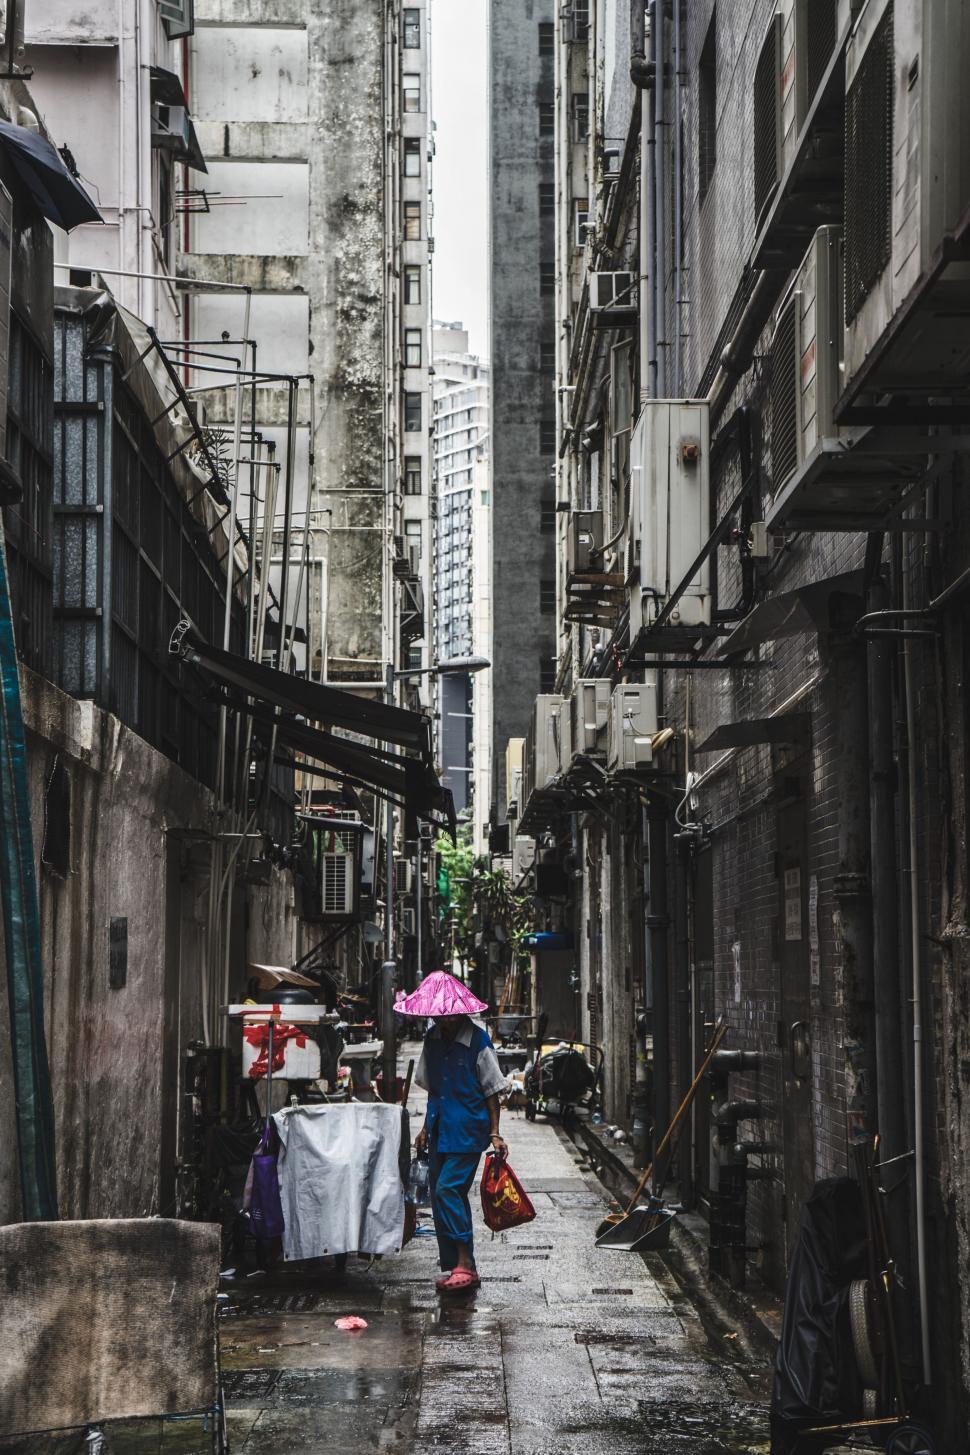 Free Image of Woman Walking Down Street Holding Umbrella 